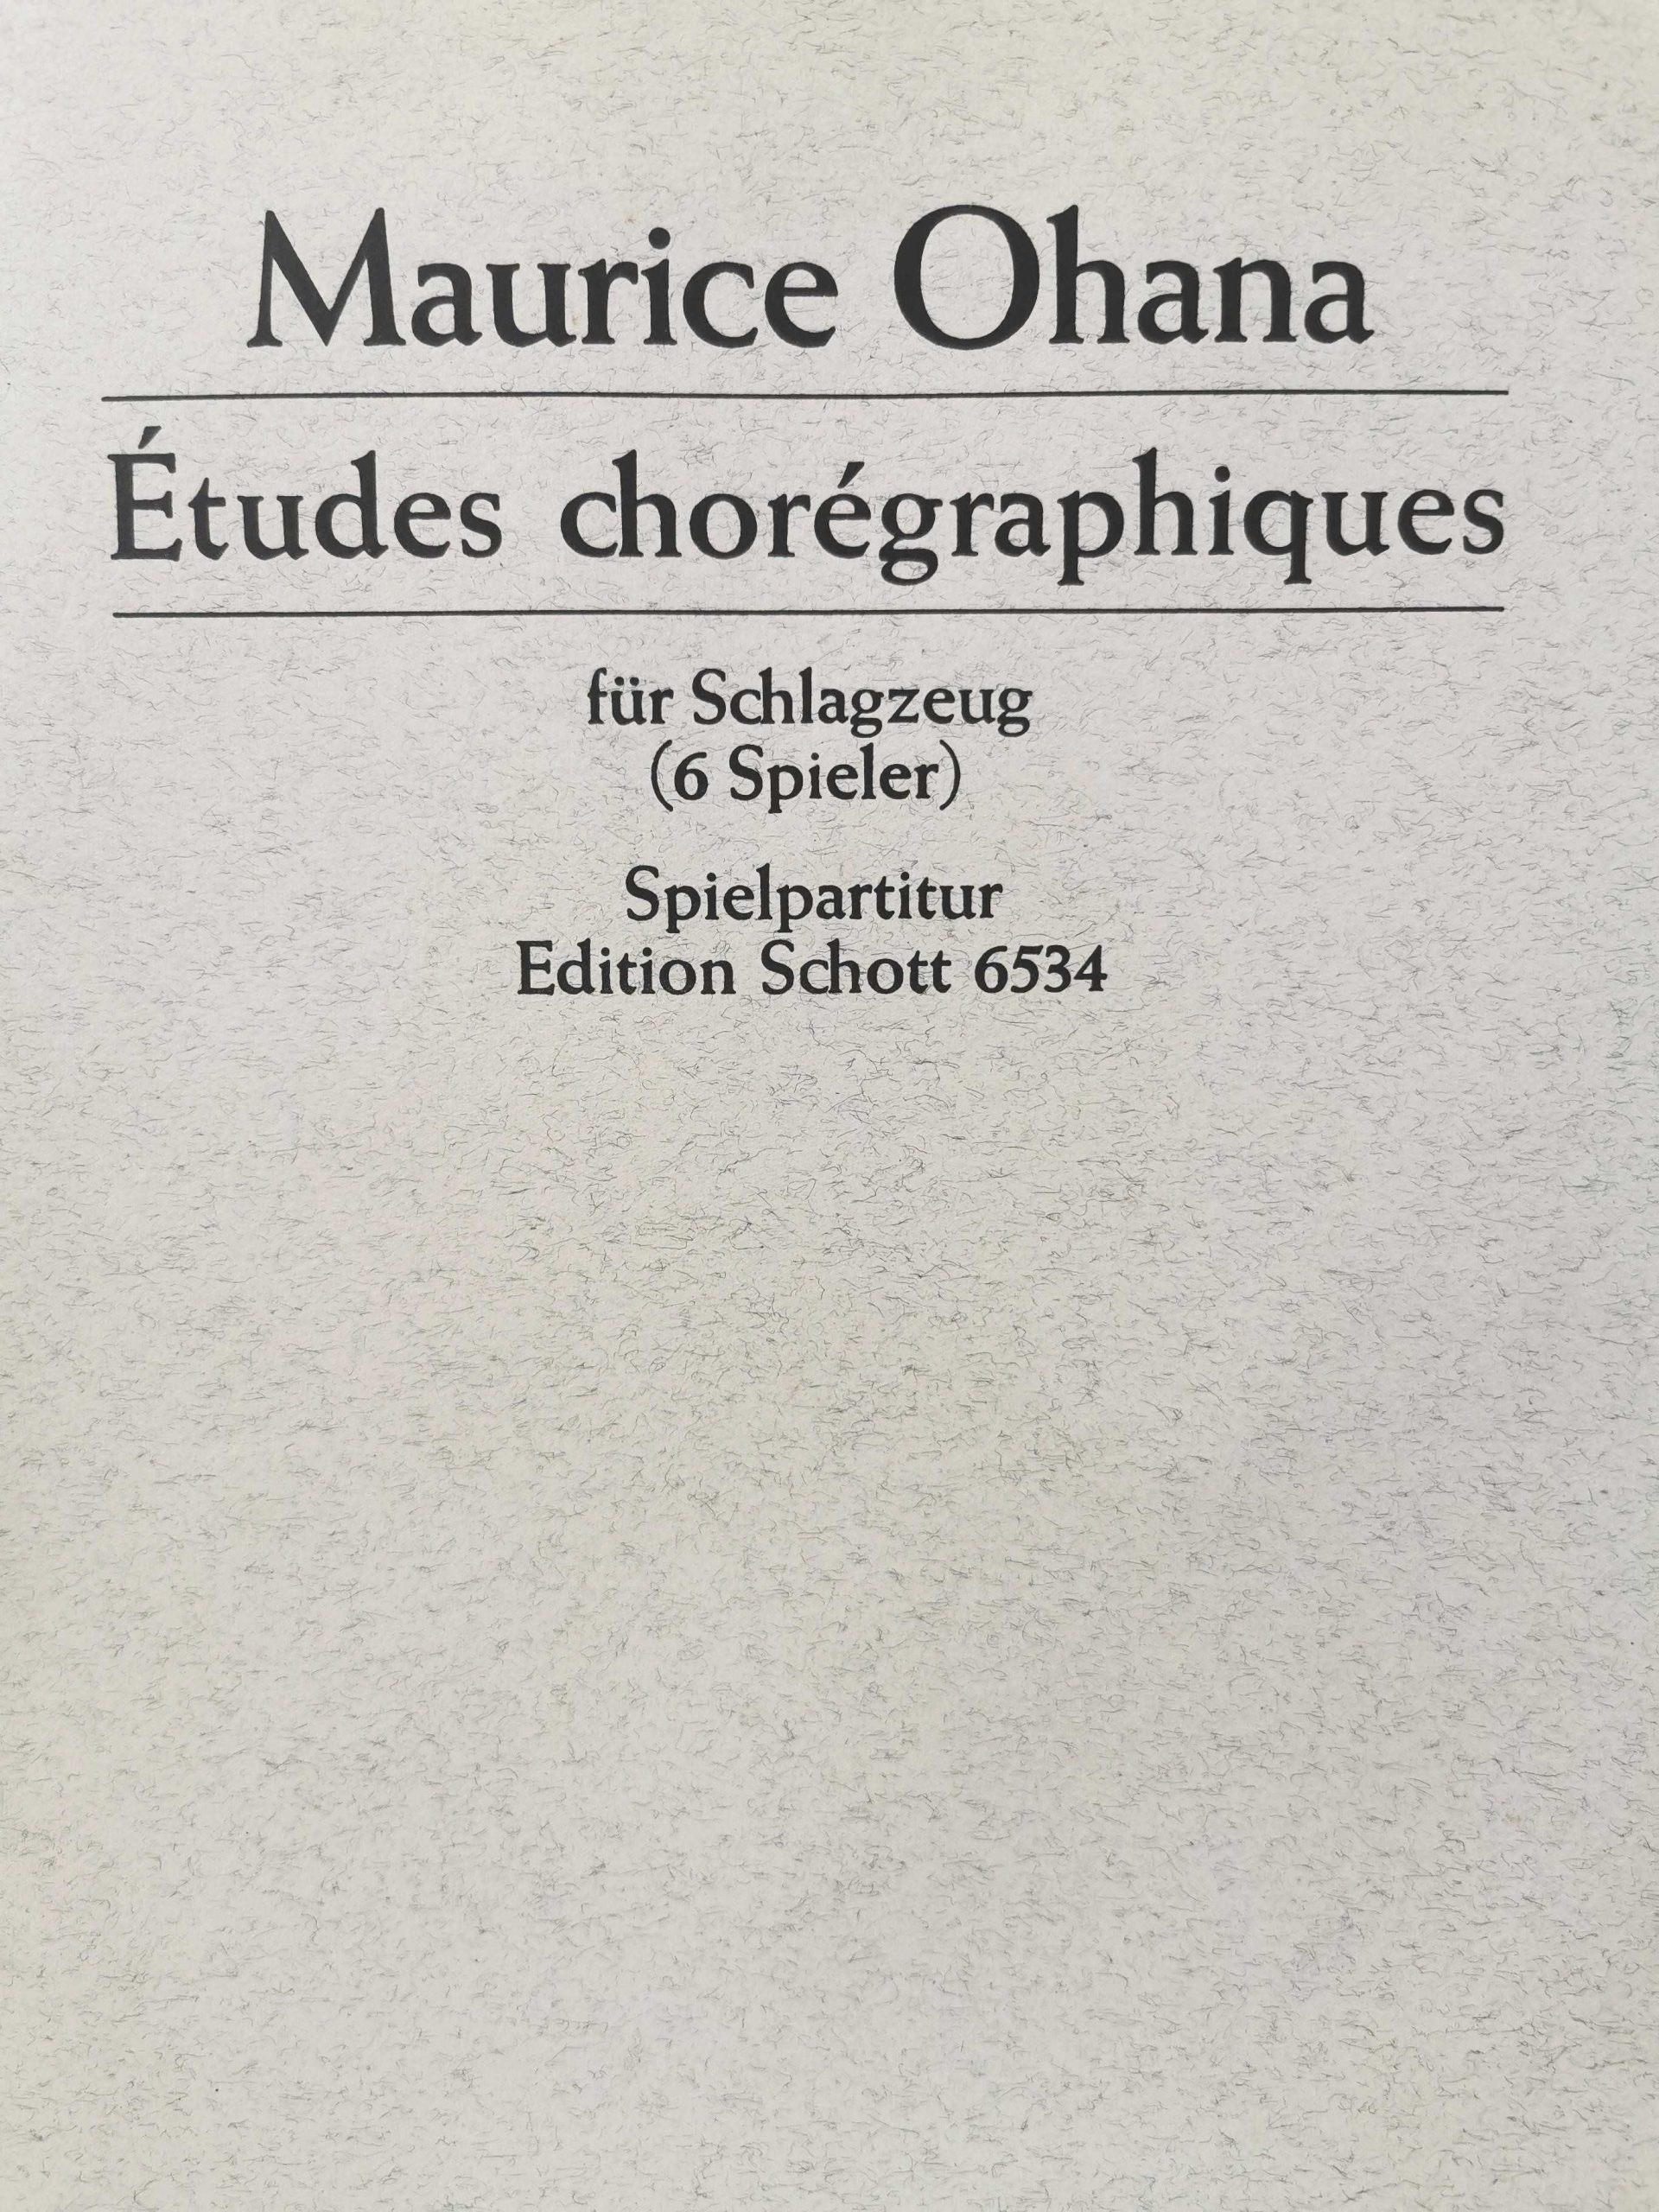 Etudes Choregraphiques by Maurice Ohana